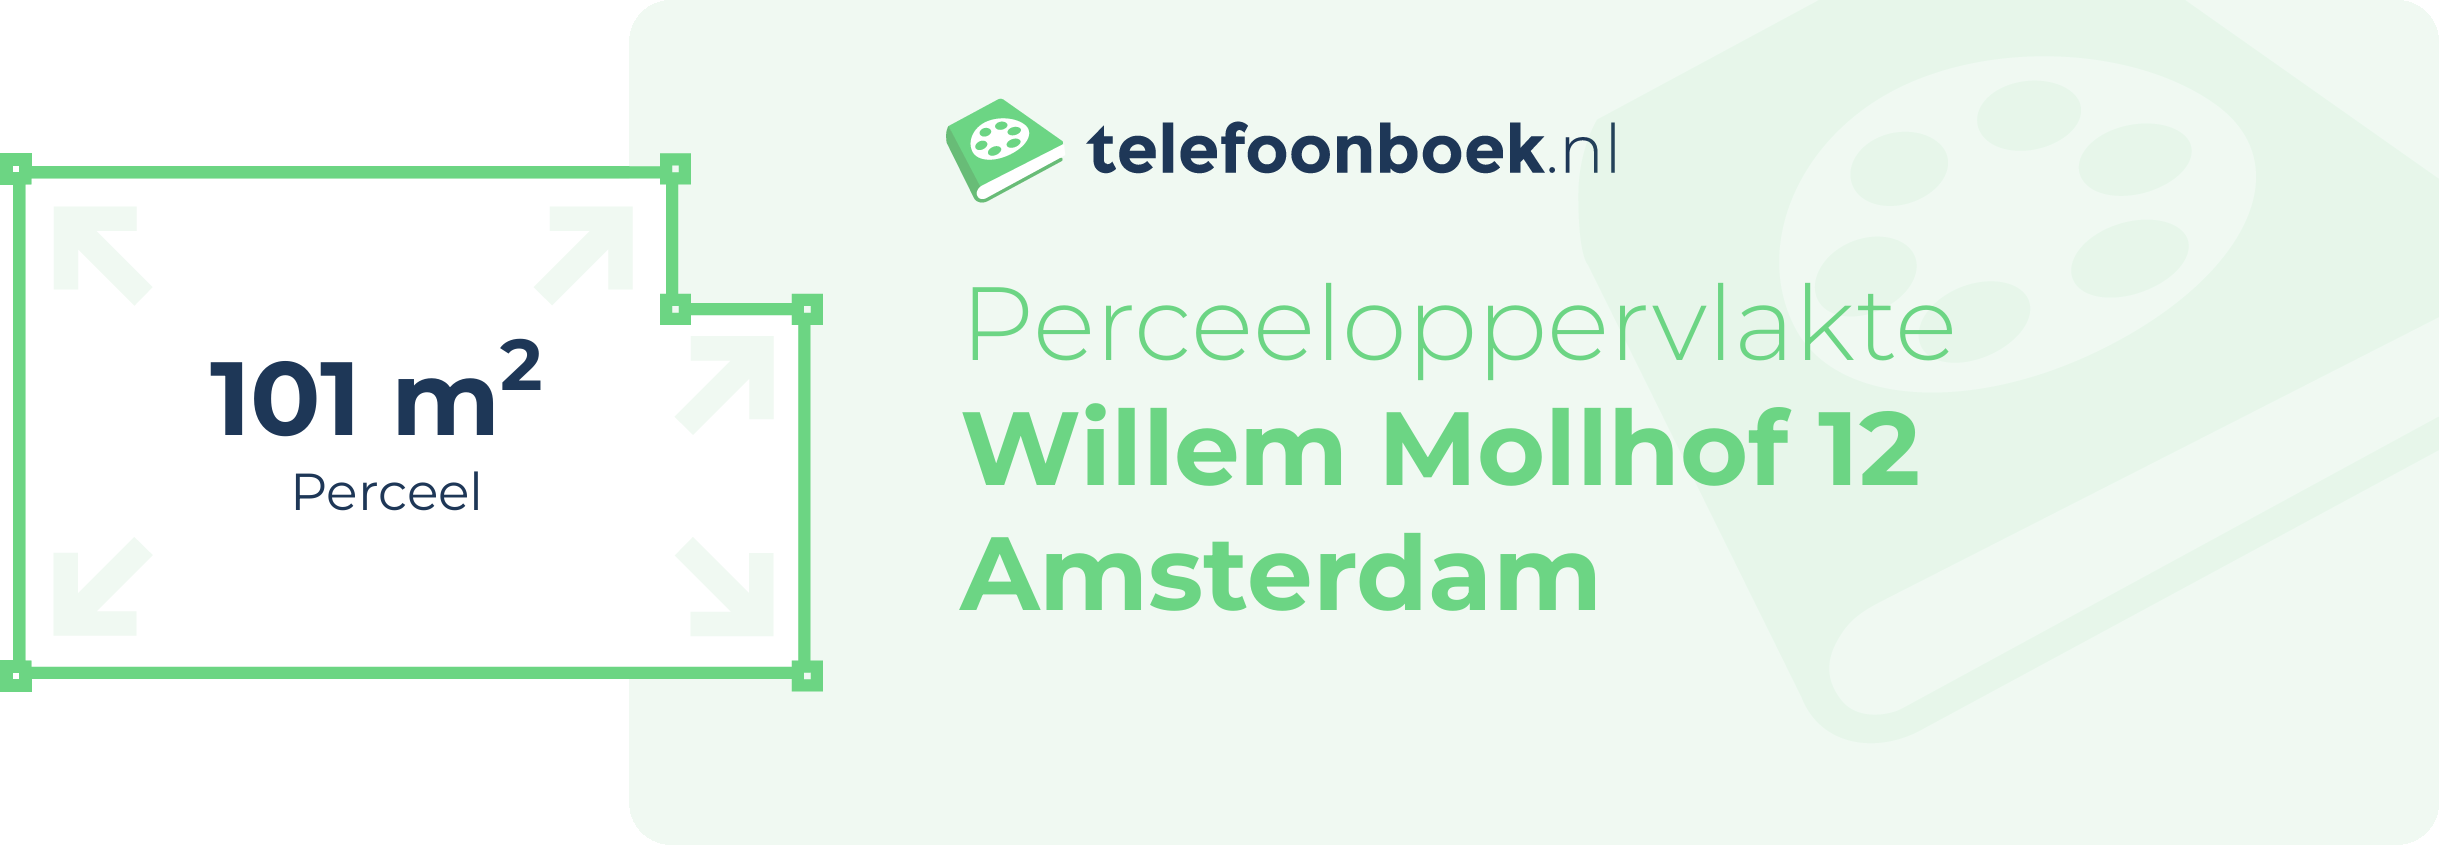 Perceeloppervlakte Willem Mollhof 12 Amsterdam